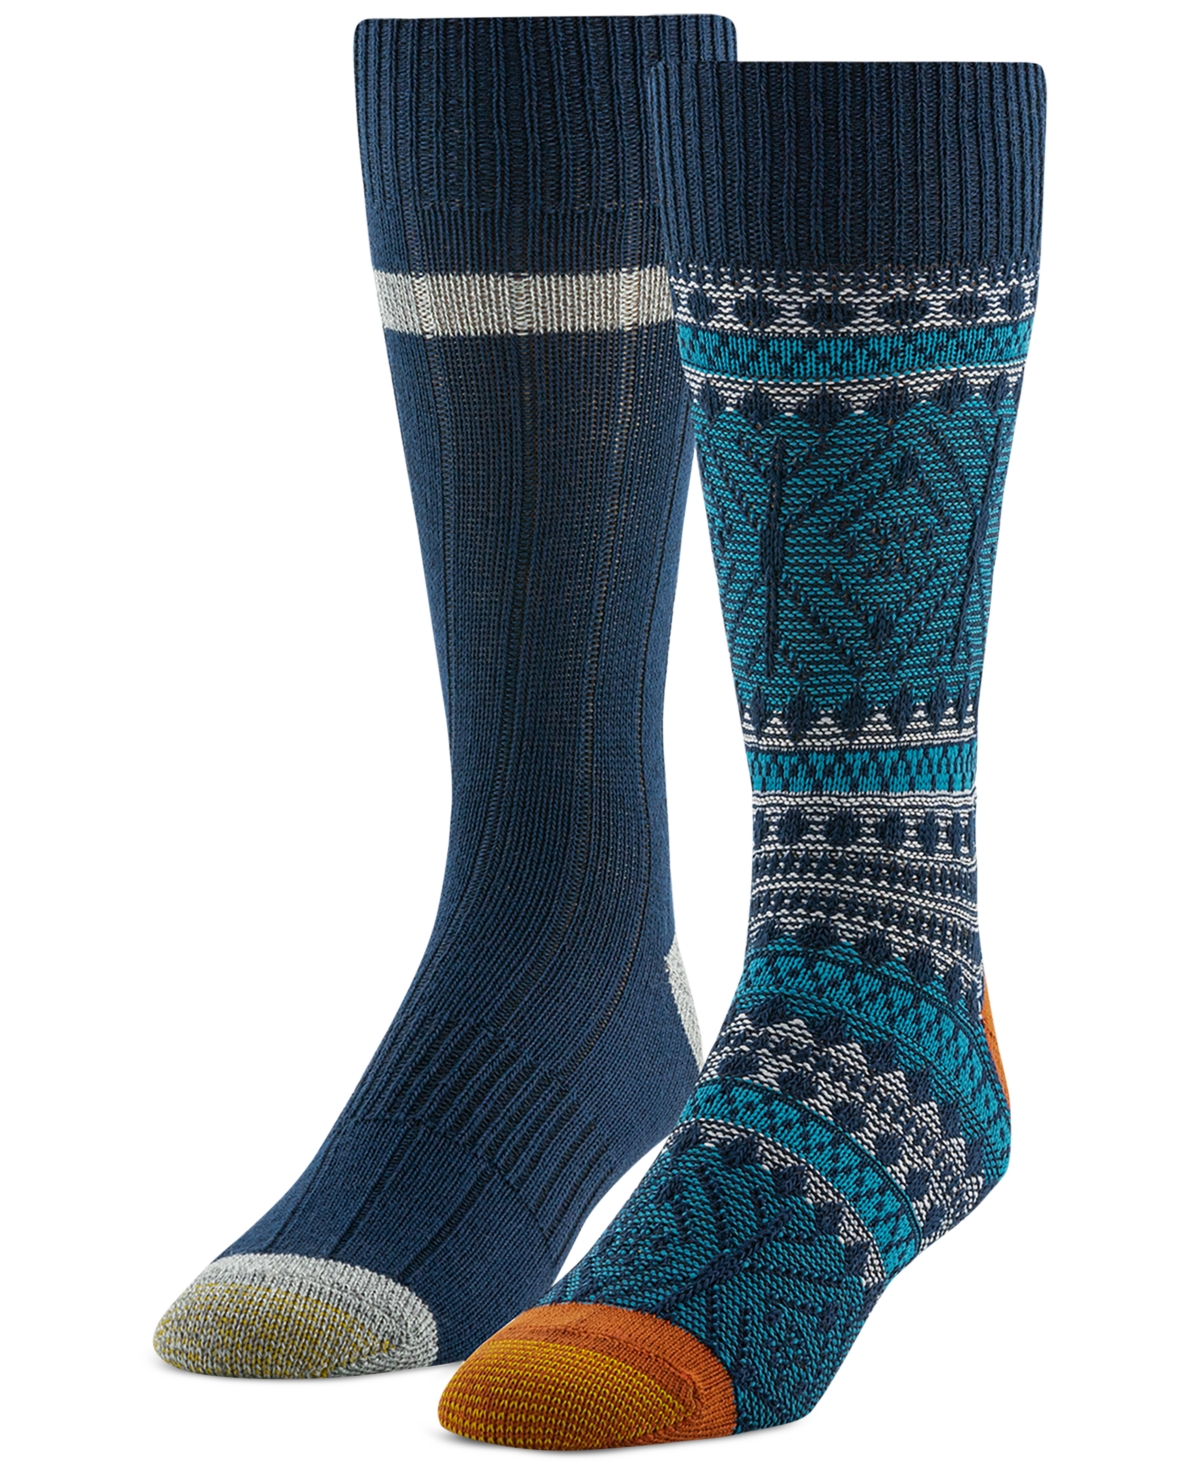 Men's 2-Pk. Fair Isle Texture Crew Socks - Multi